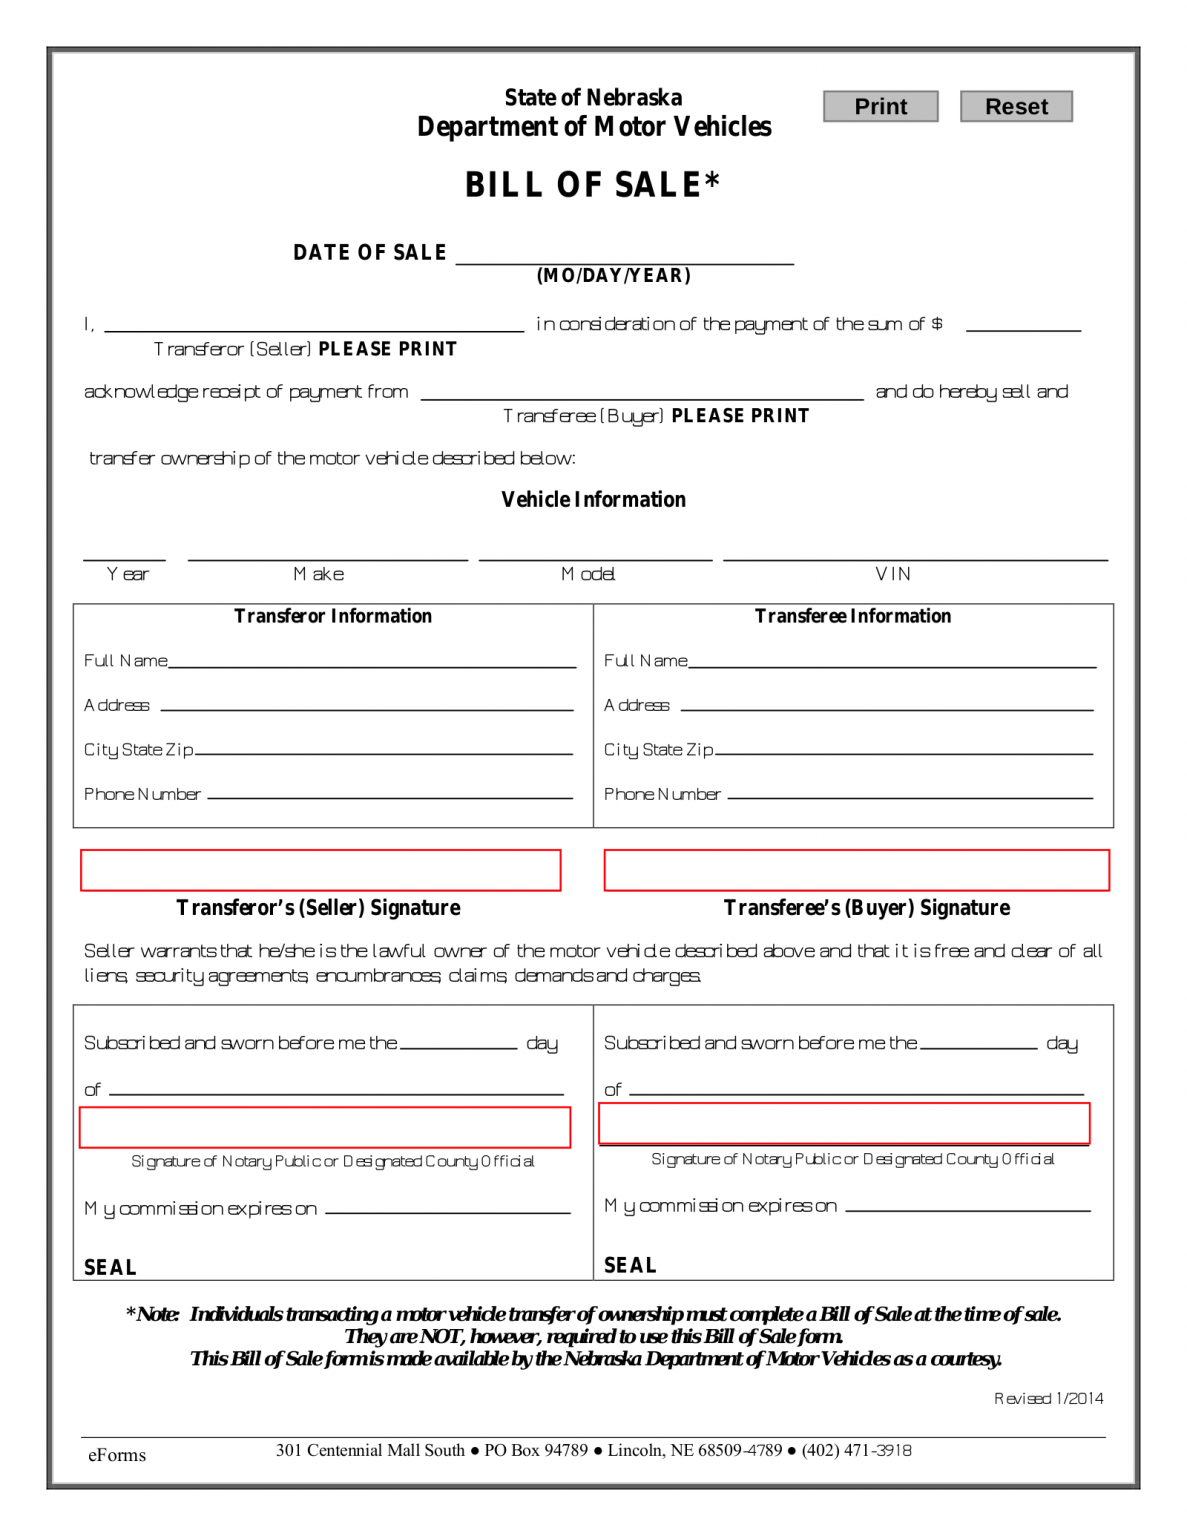 free-nebraska-bill-of-sale-forms-4-pdf-eforms